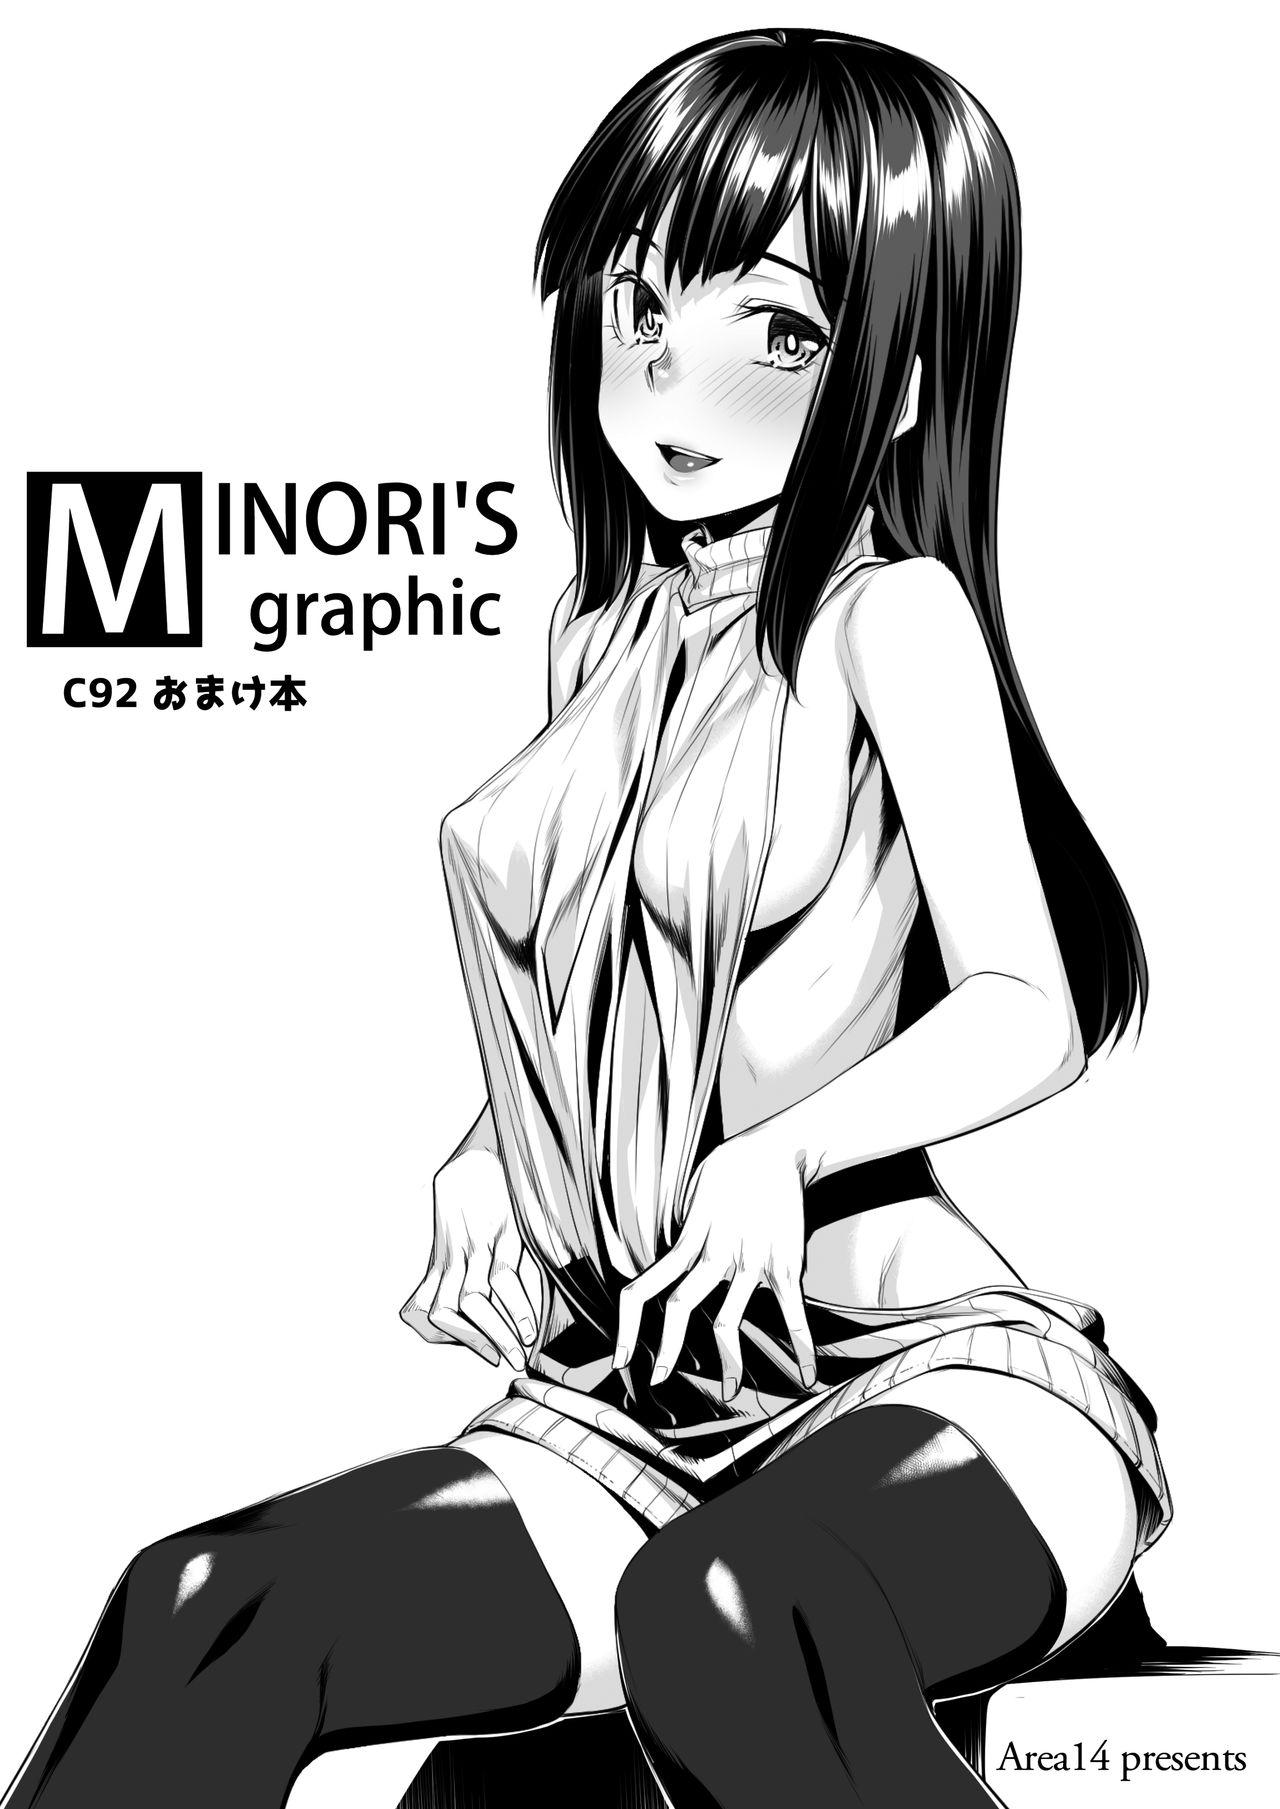 MINORI'S graphic C92 Omakebon 1